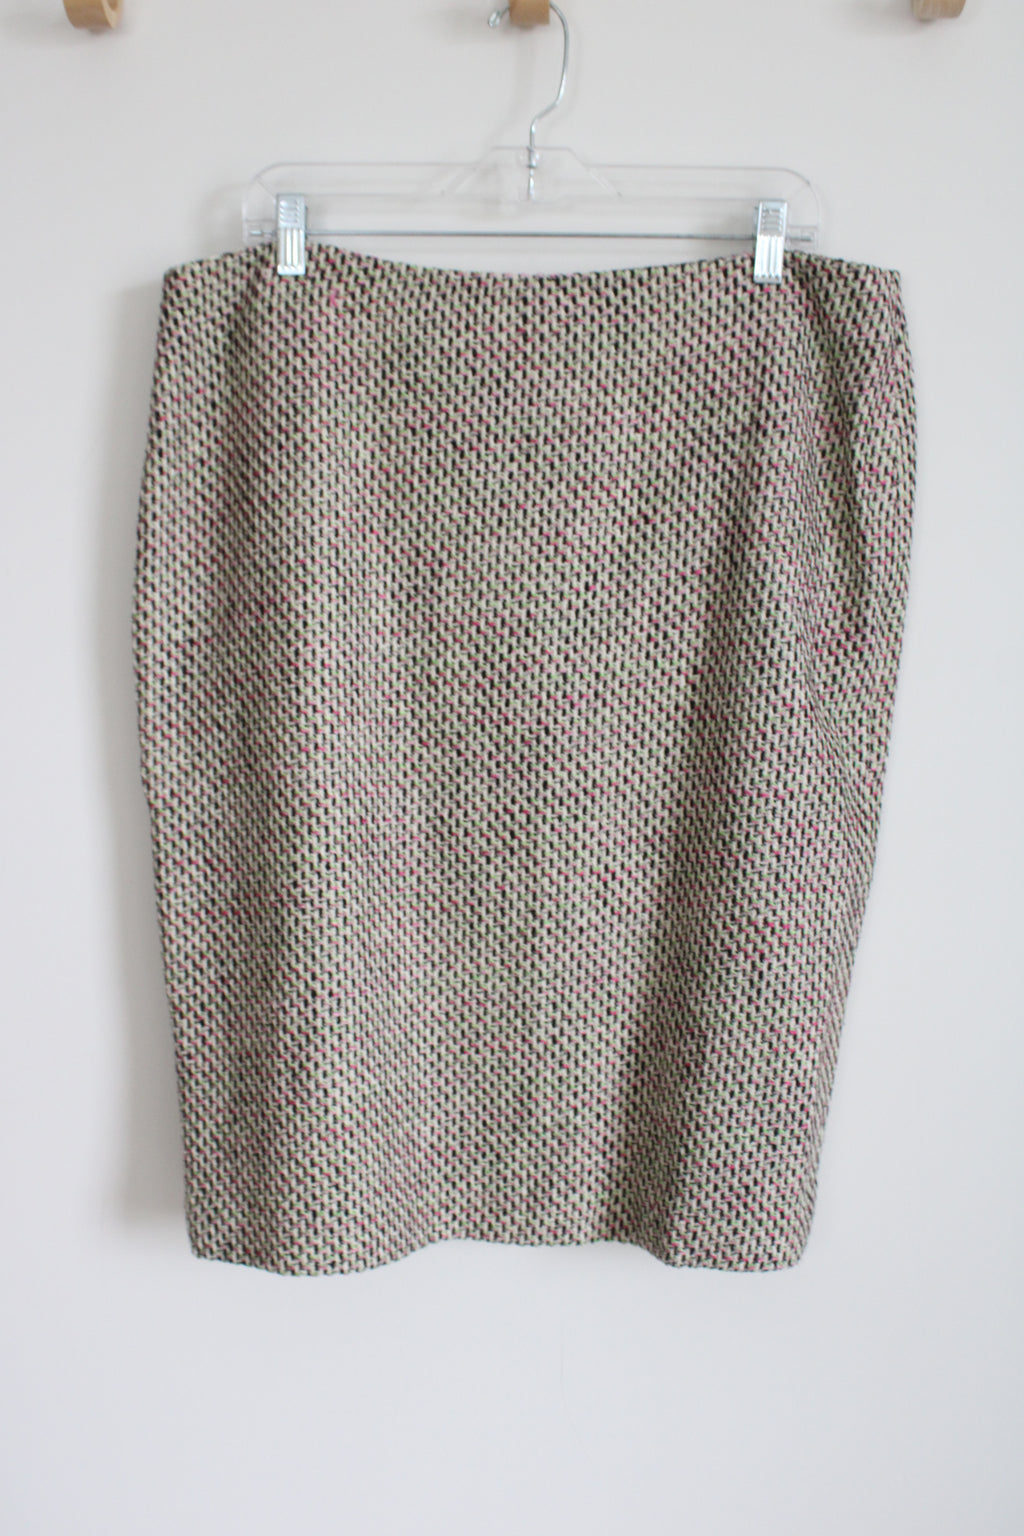 NEW Talbots Pink Green Tweed Pencil Skirt | 16